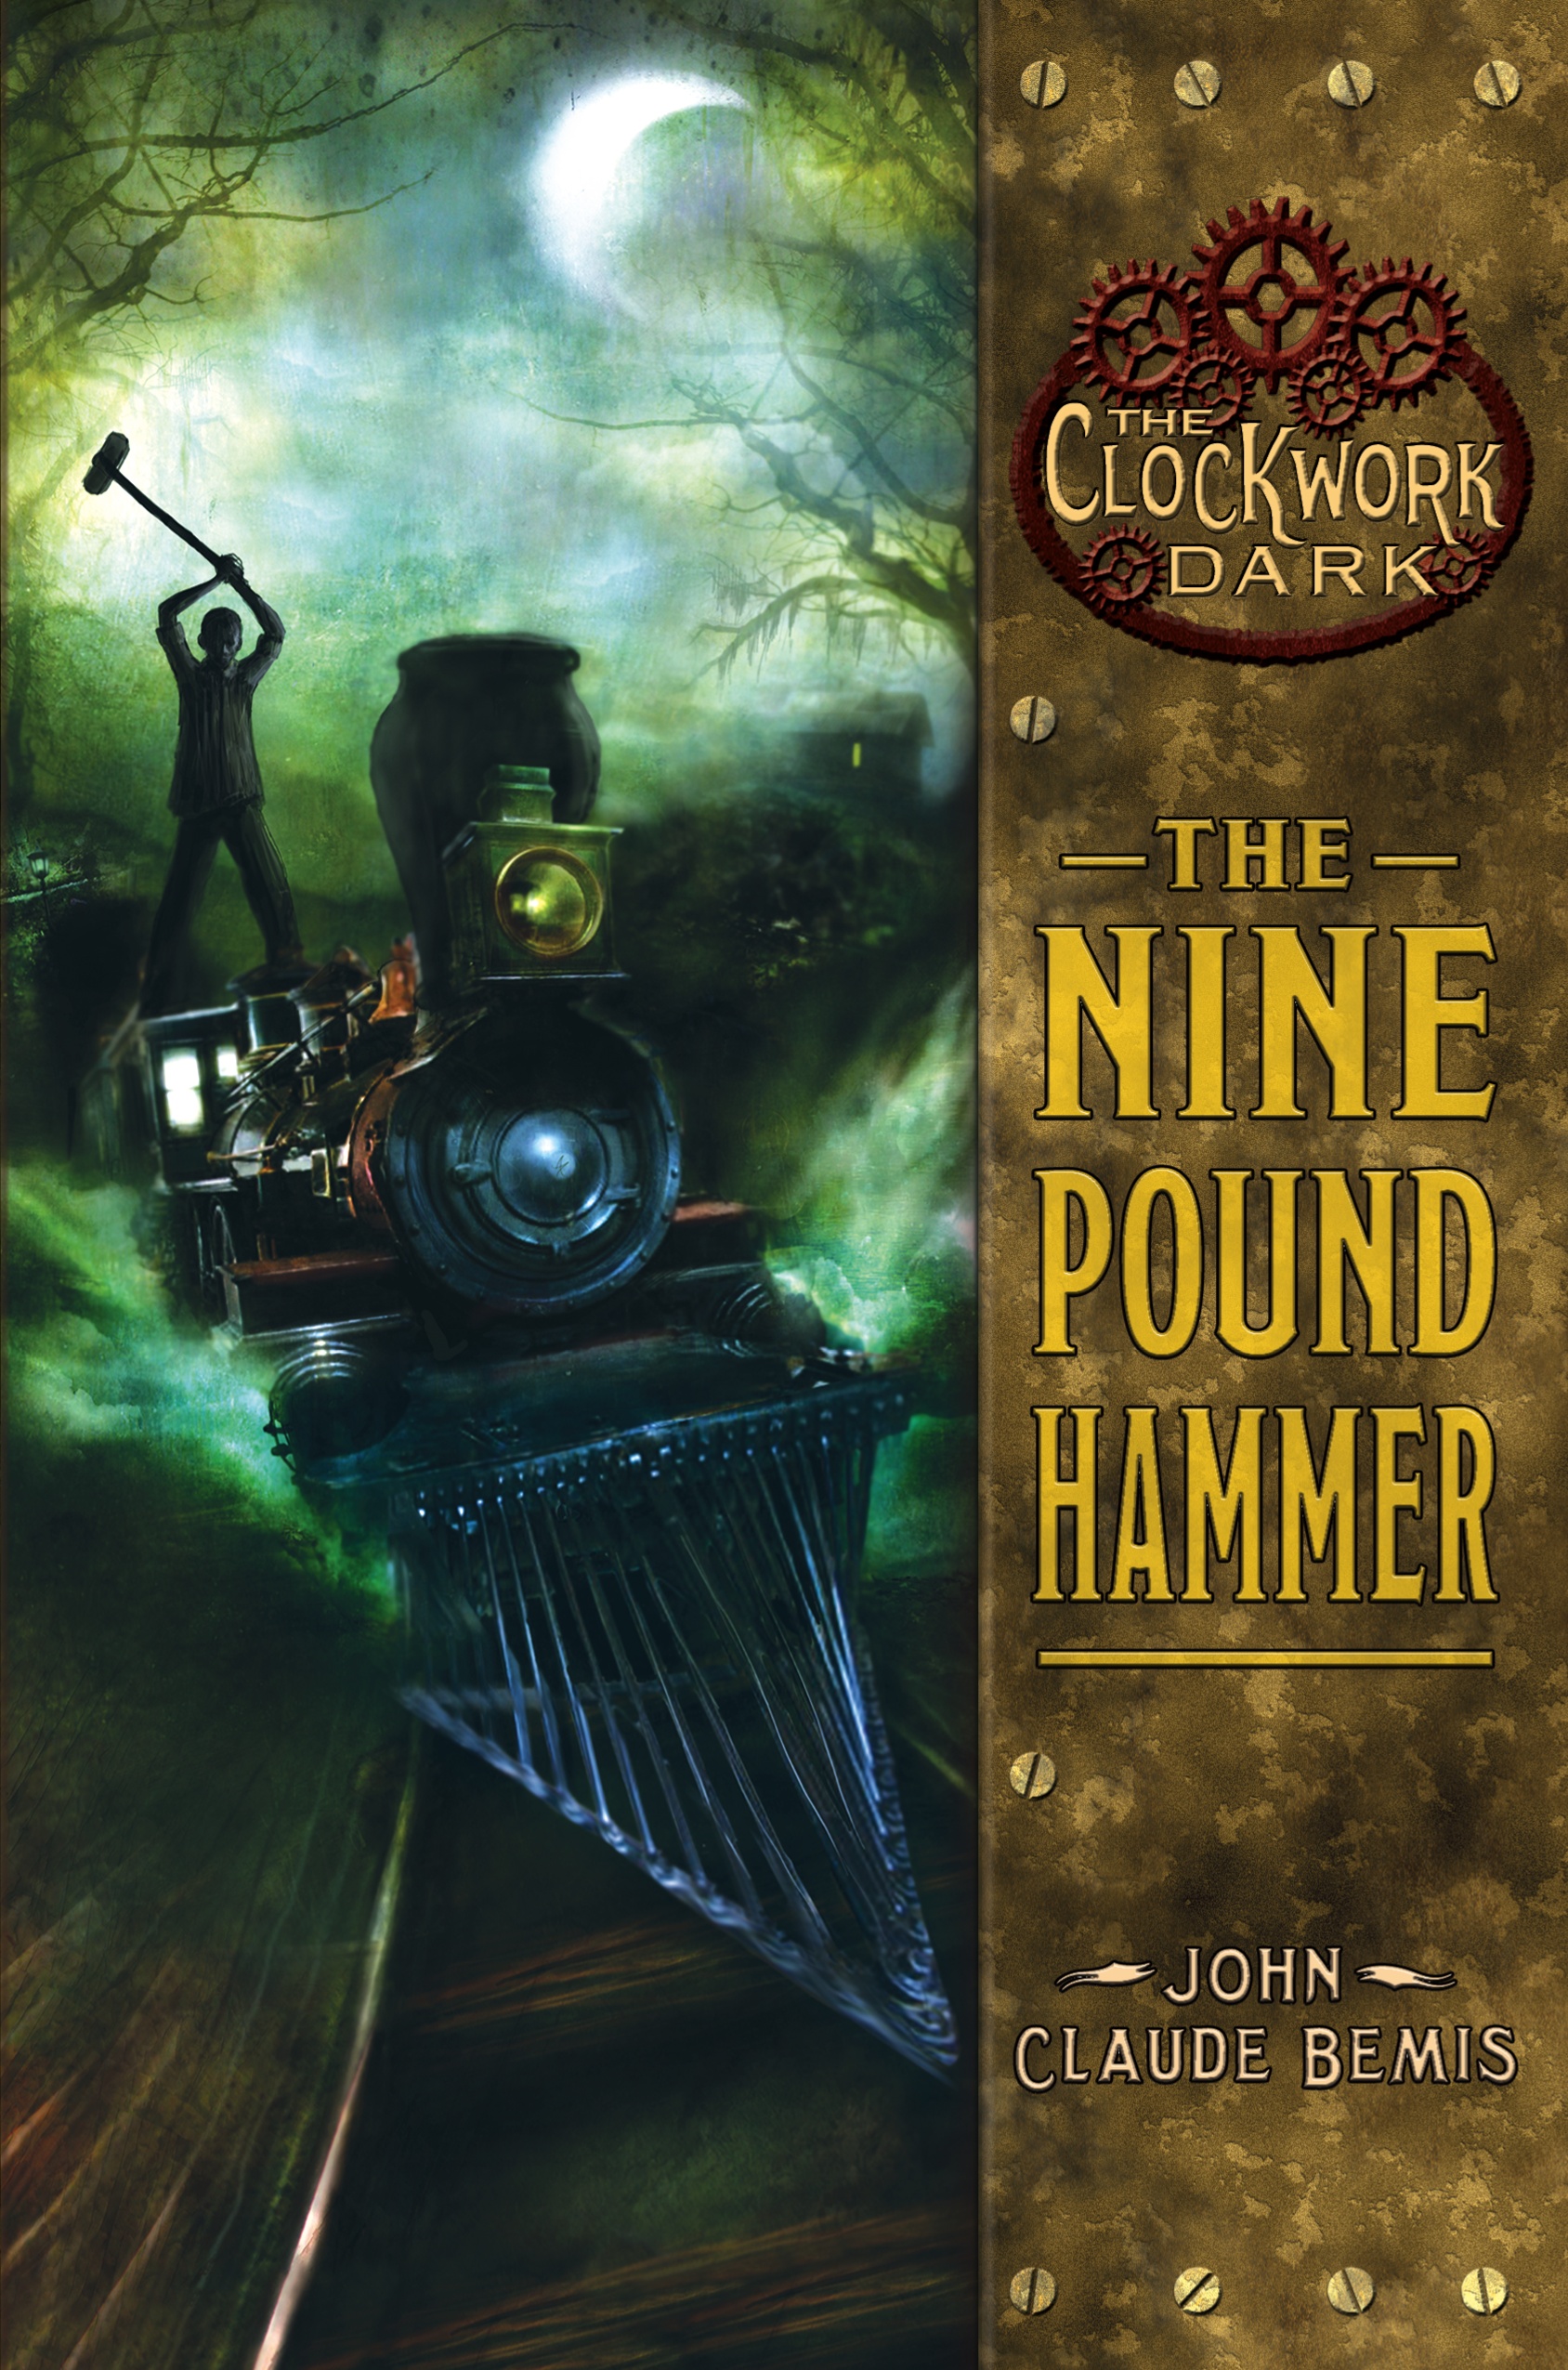 Book One - The Nine Pound Hammer